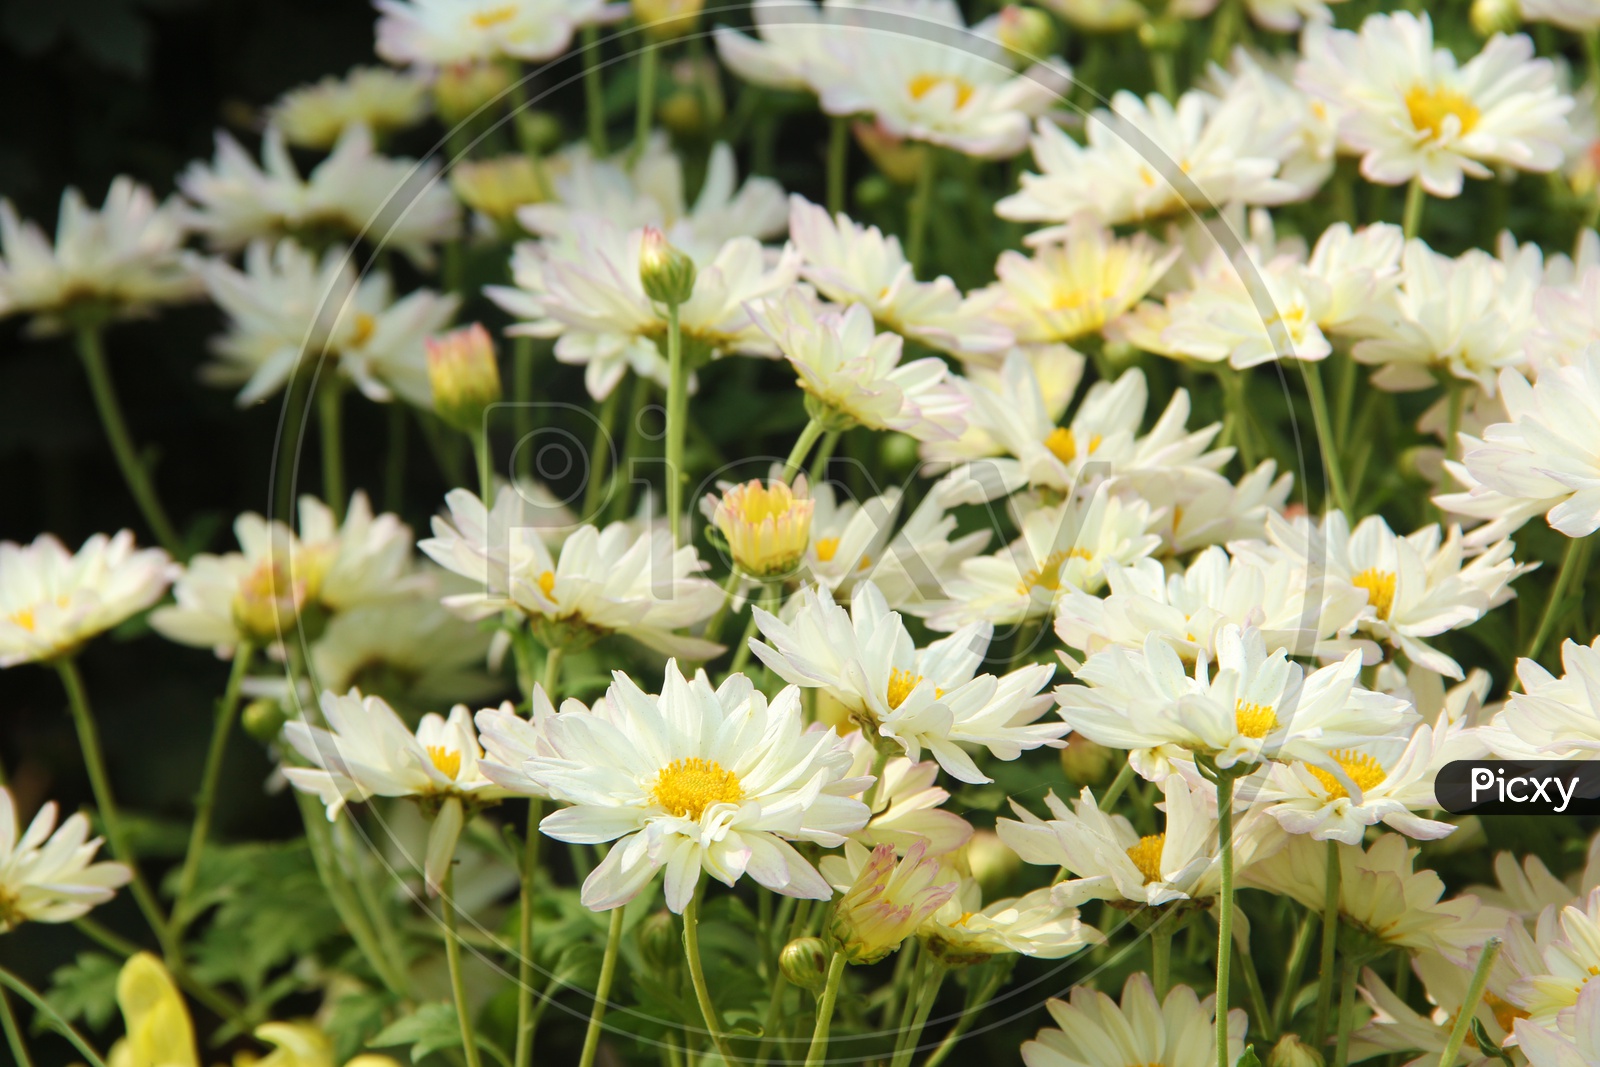 White Chrysanthemum Growing in a Garden